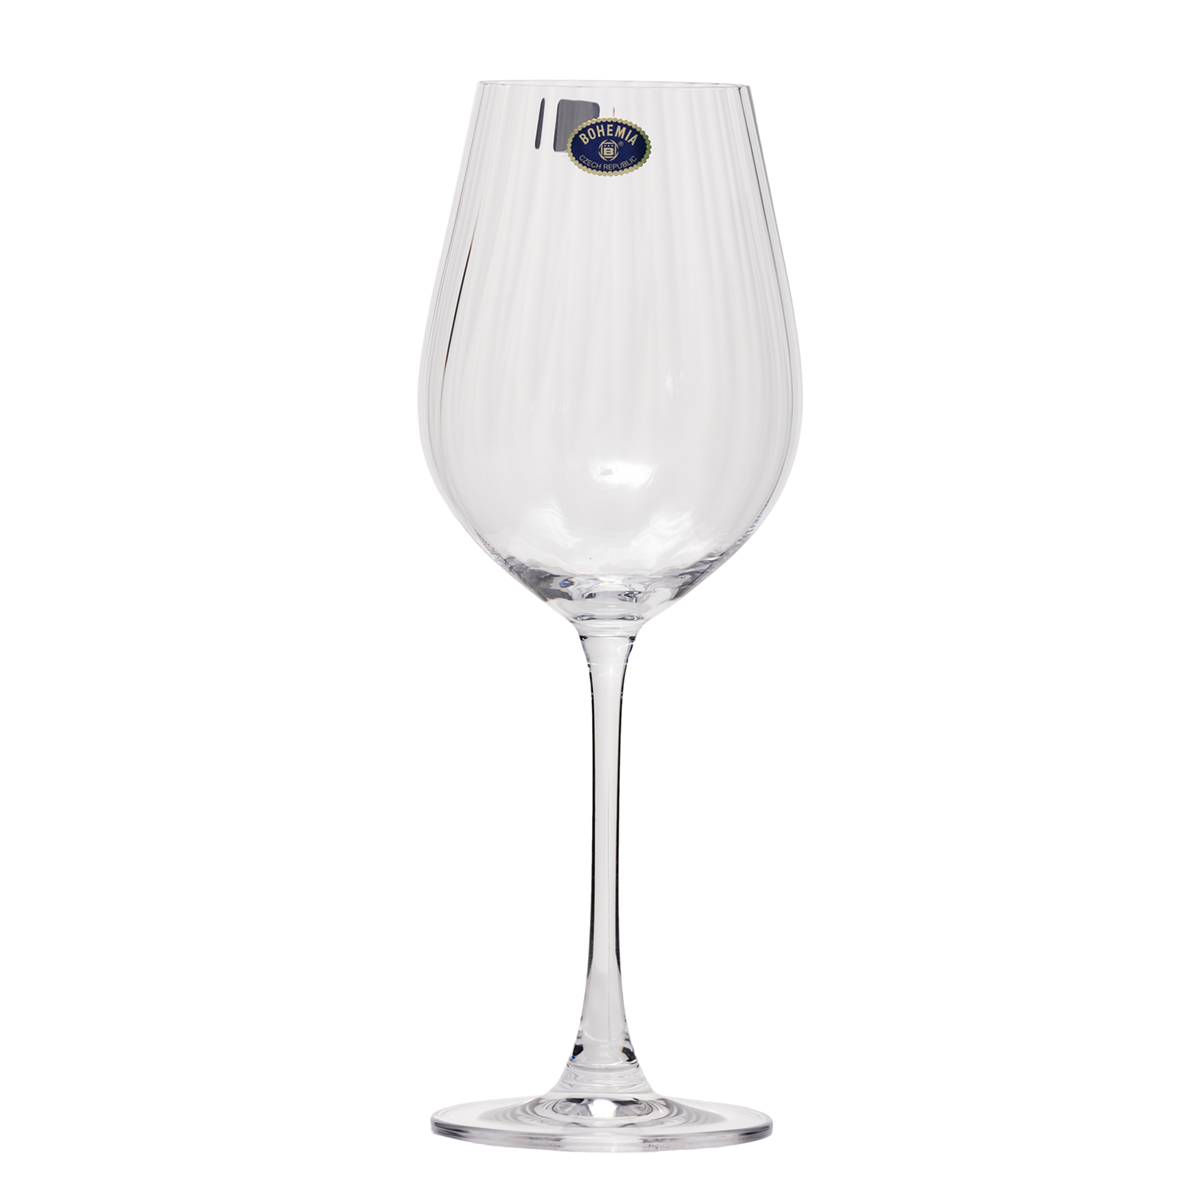 COLUMBA OPTIC - Set 6 pahare sticla cristalina vin rosu 500 ml